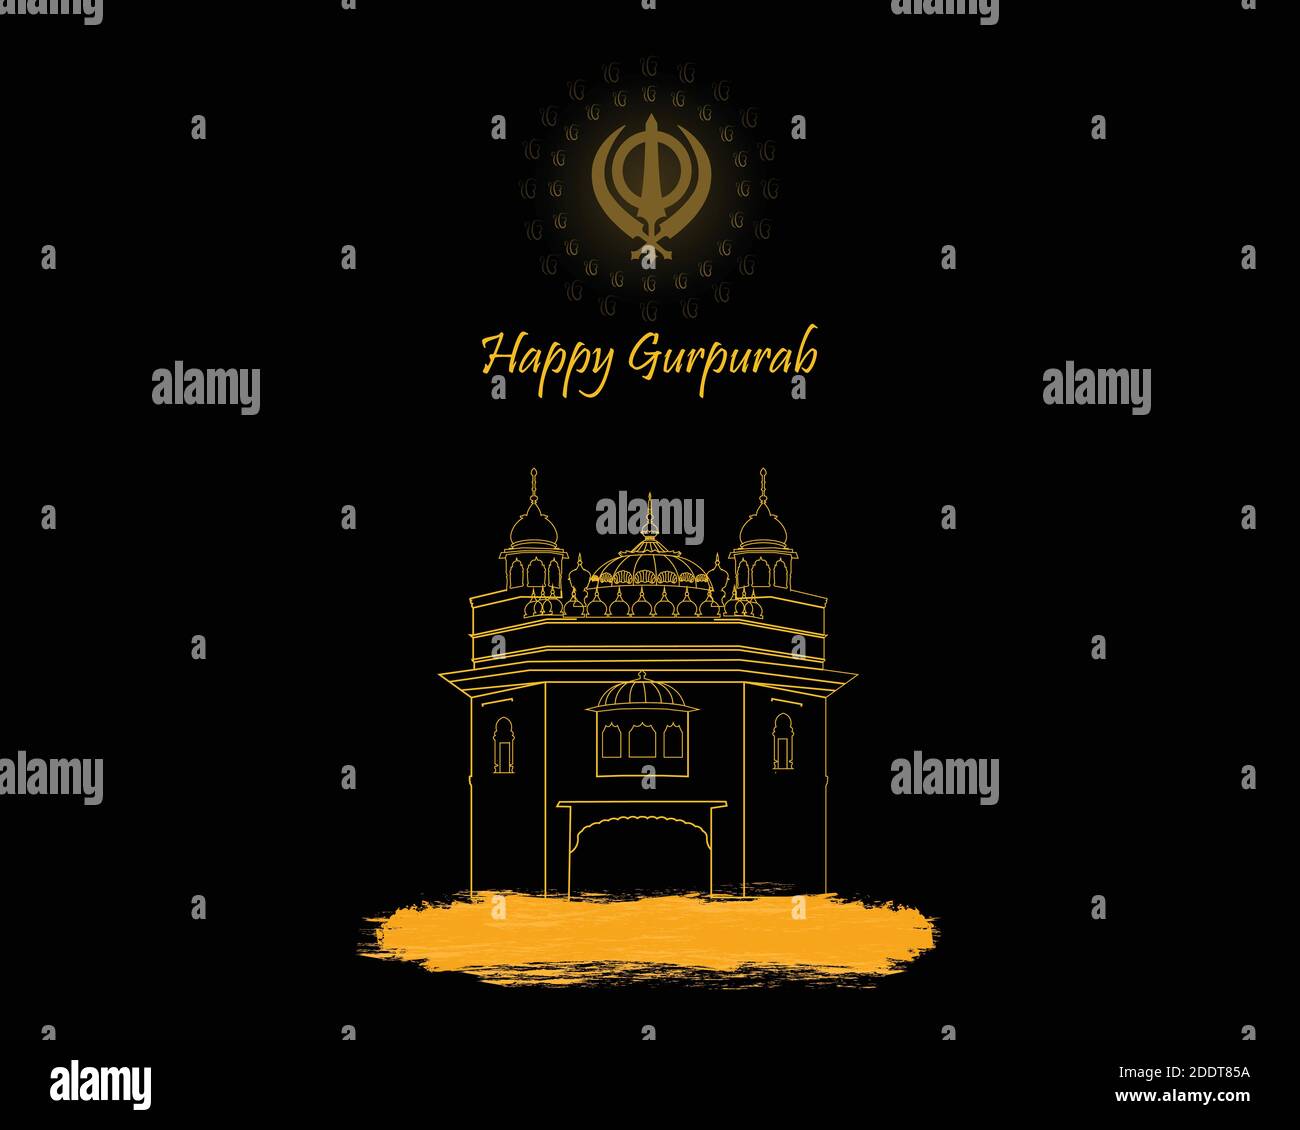 Vector illustration of guru nanak prakash parv. Happy Gurpurab. Golden and white colored temple on dark color background Stock Vector